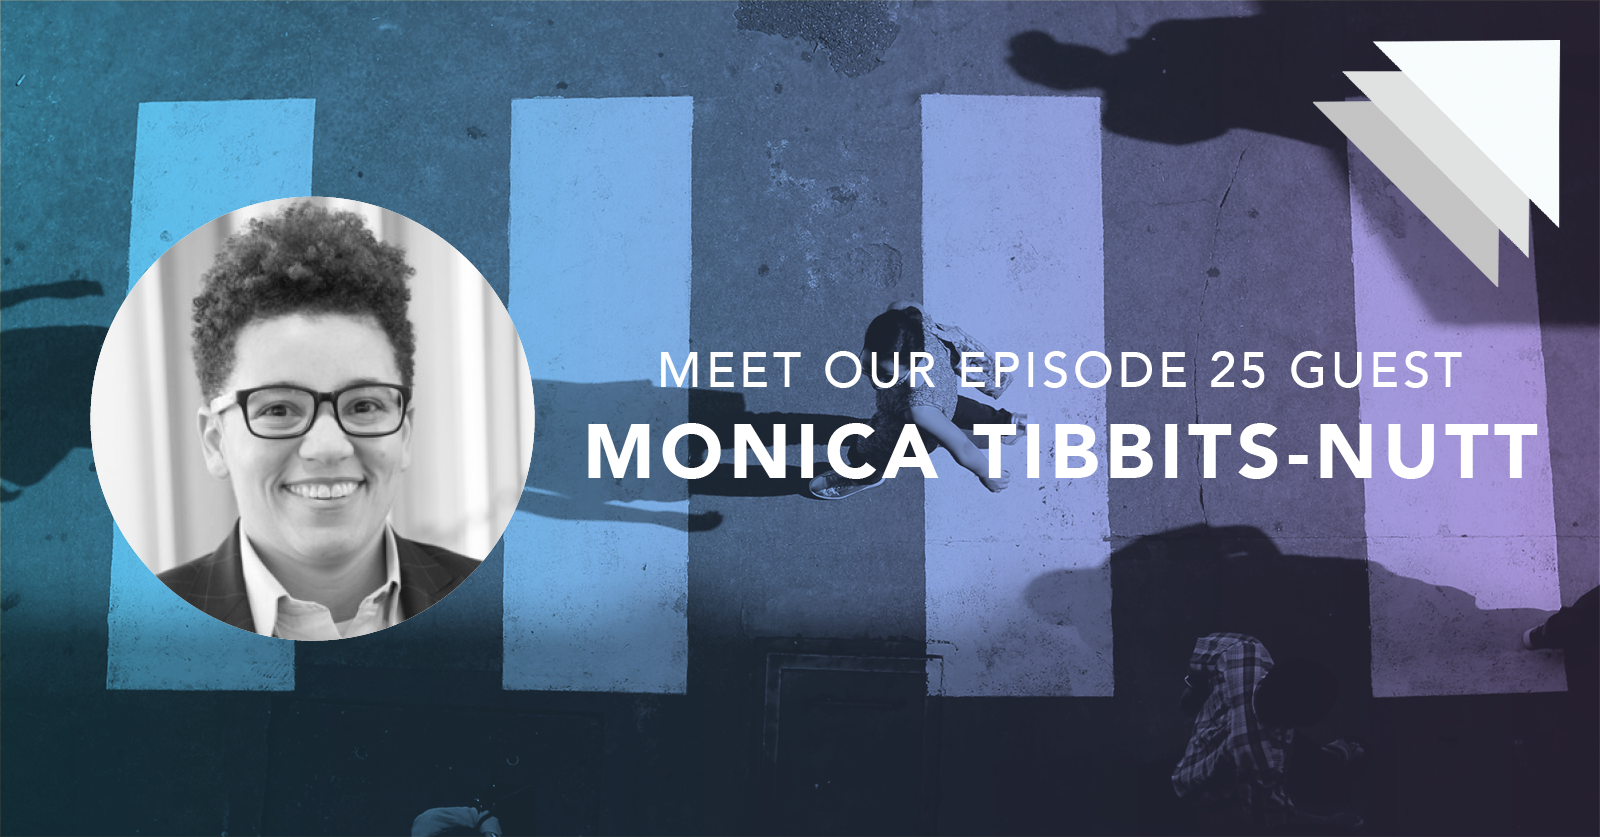 meet our episode 25 guest Monica Tibbits-Nutt